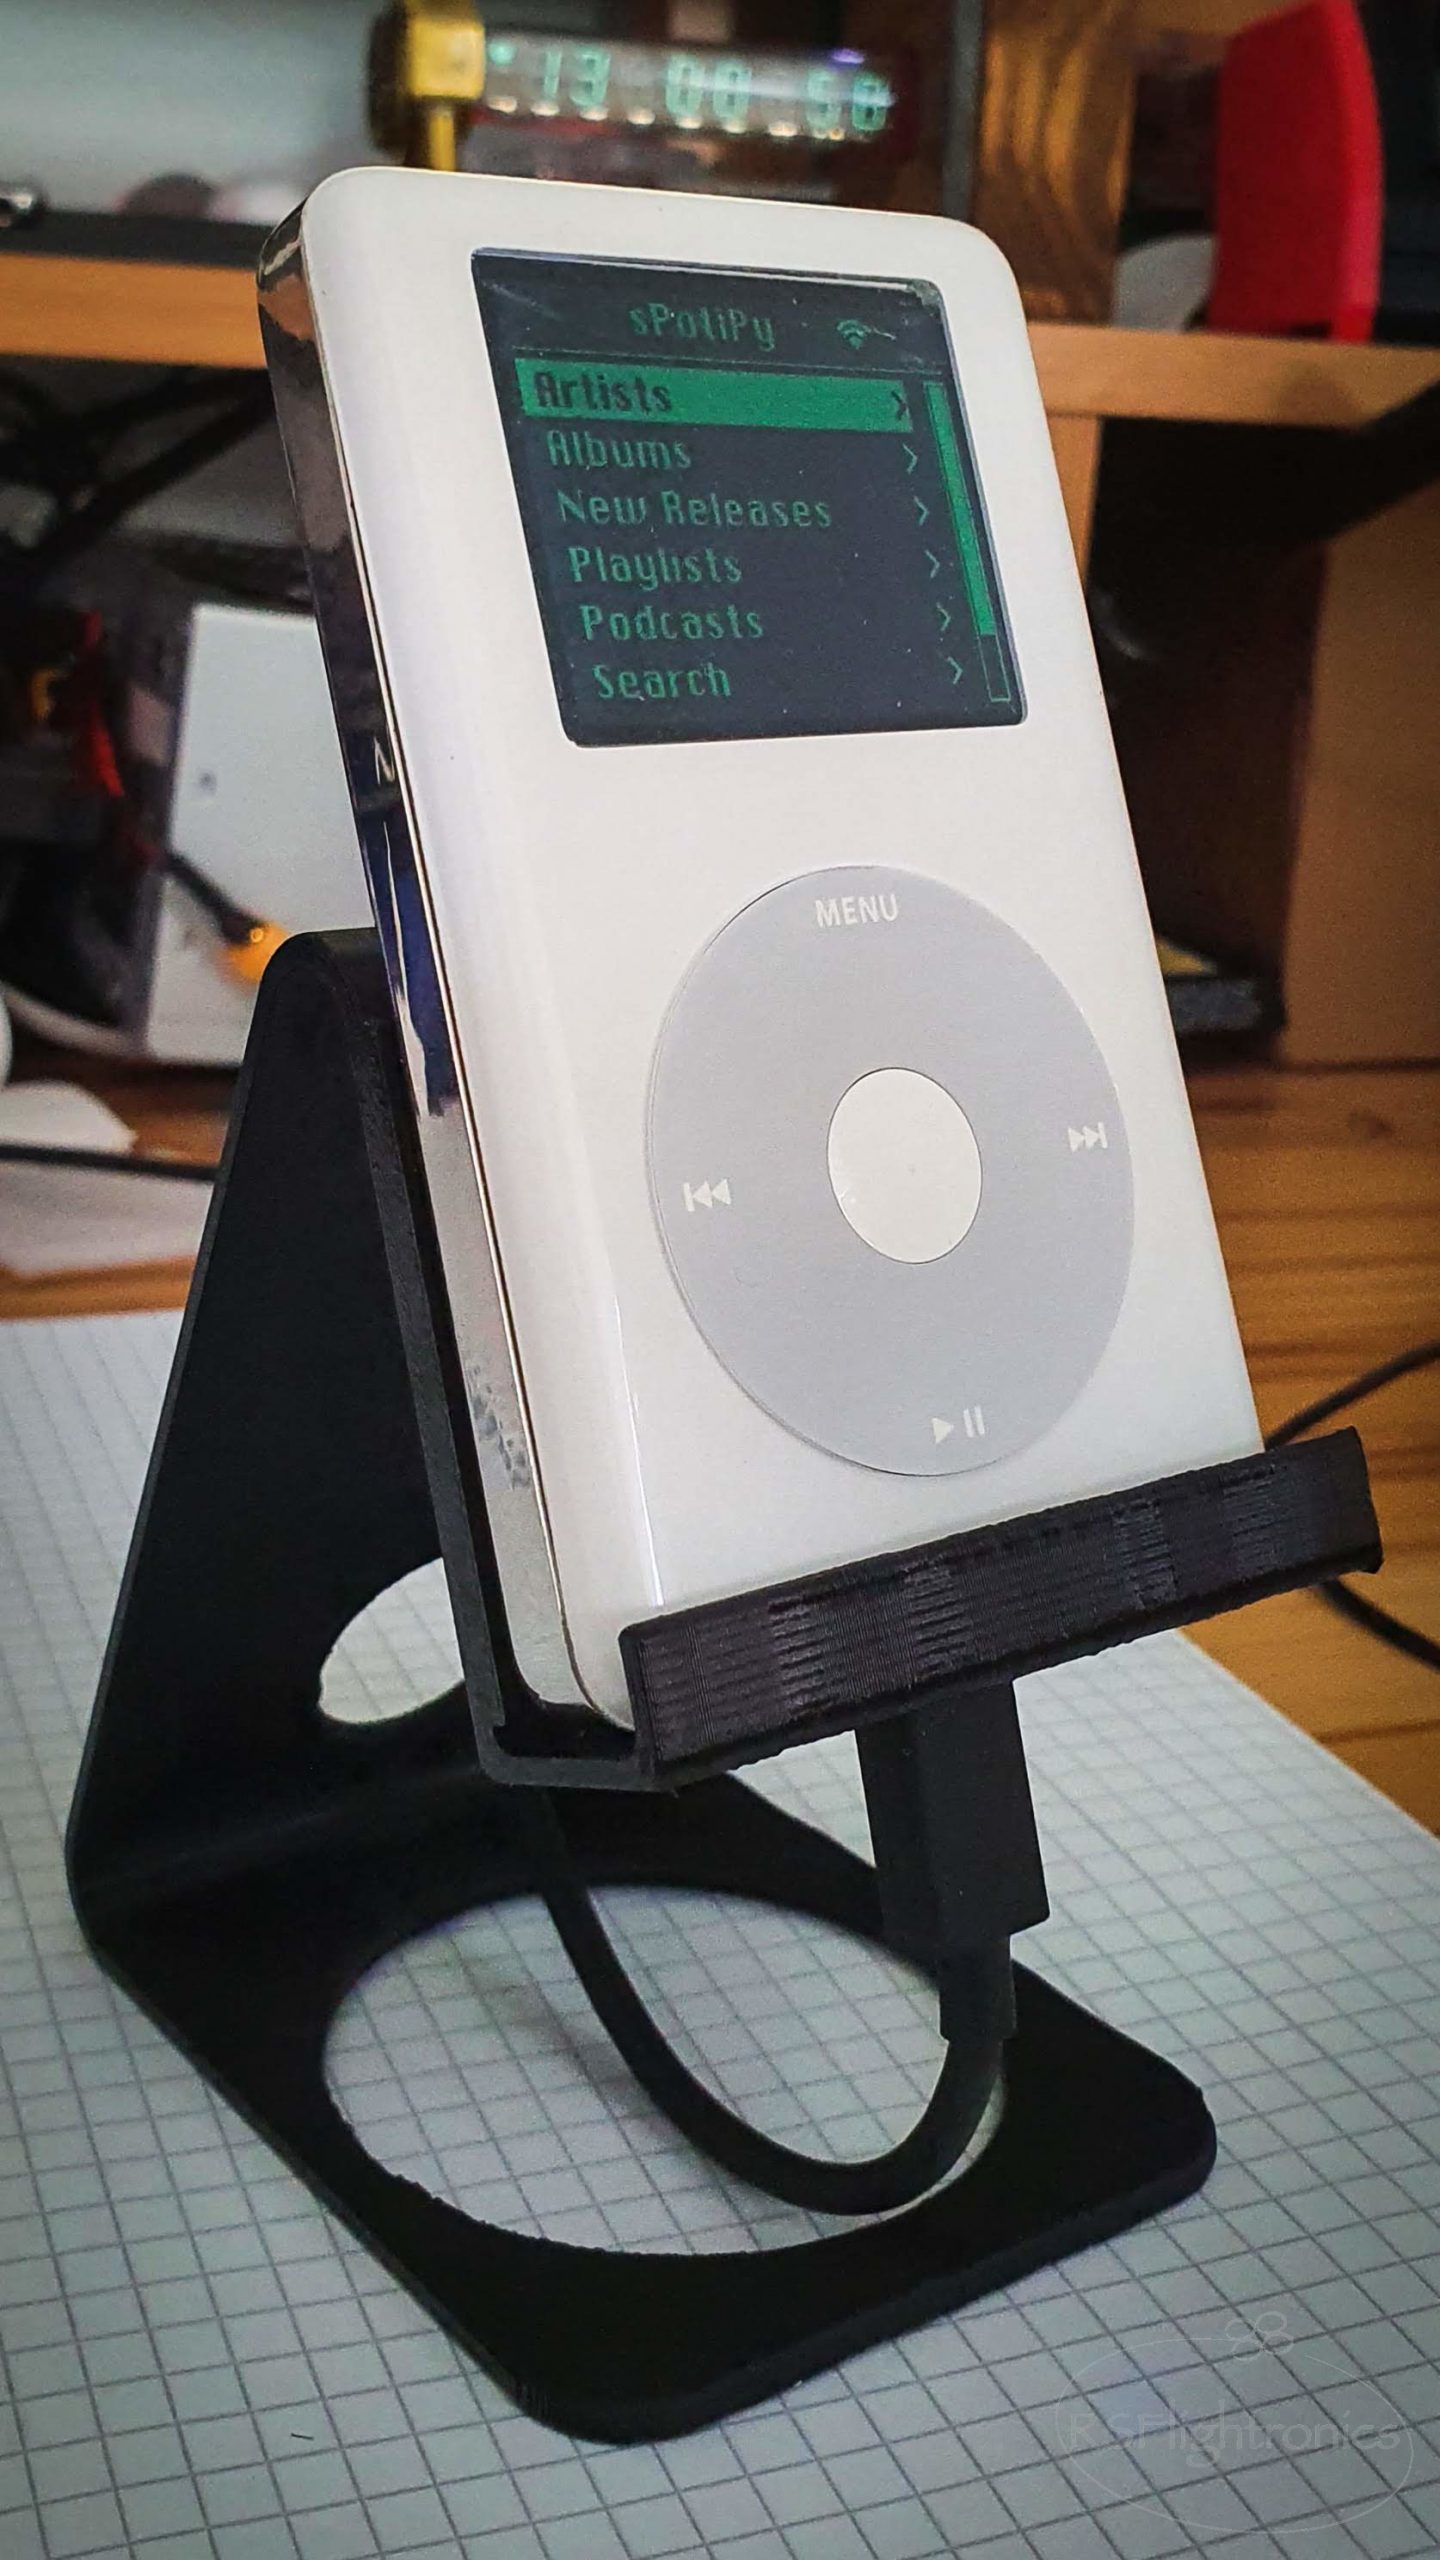 iPod Classic Hacked To Run Spotify